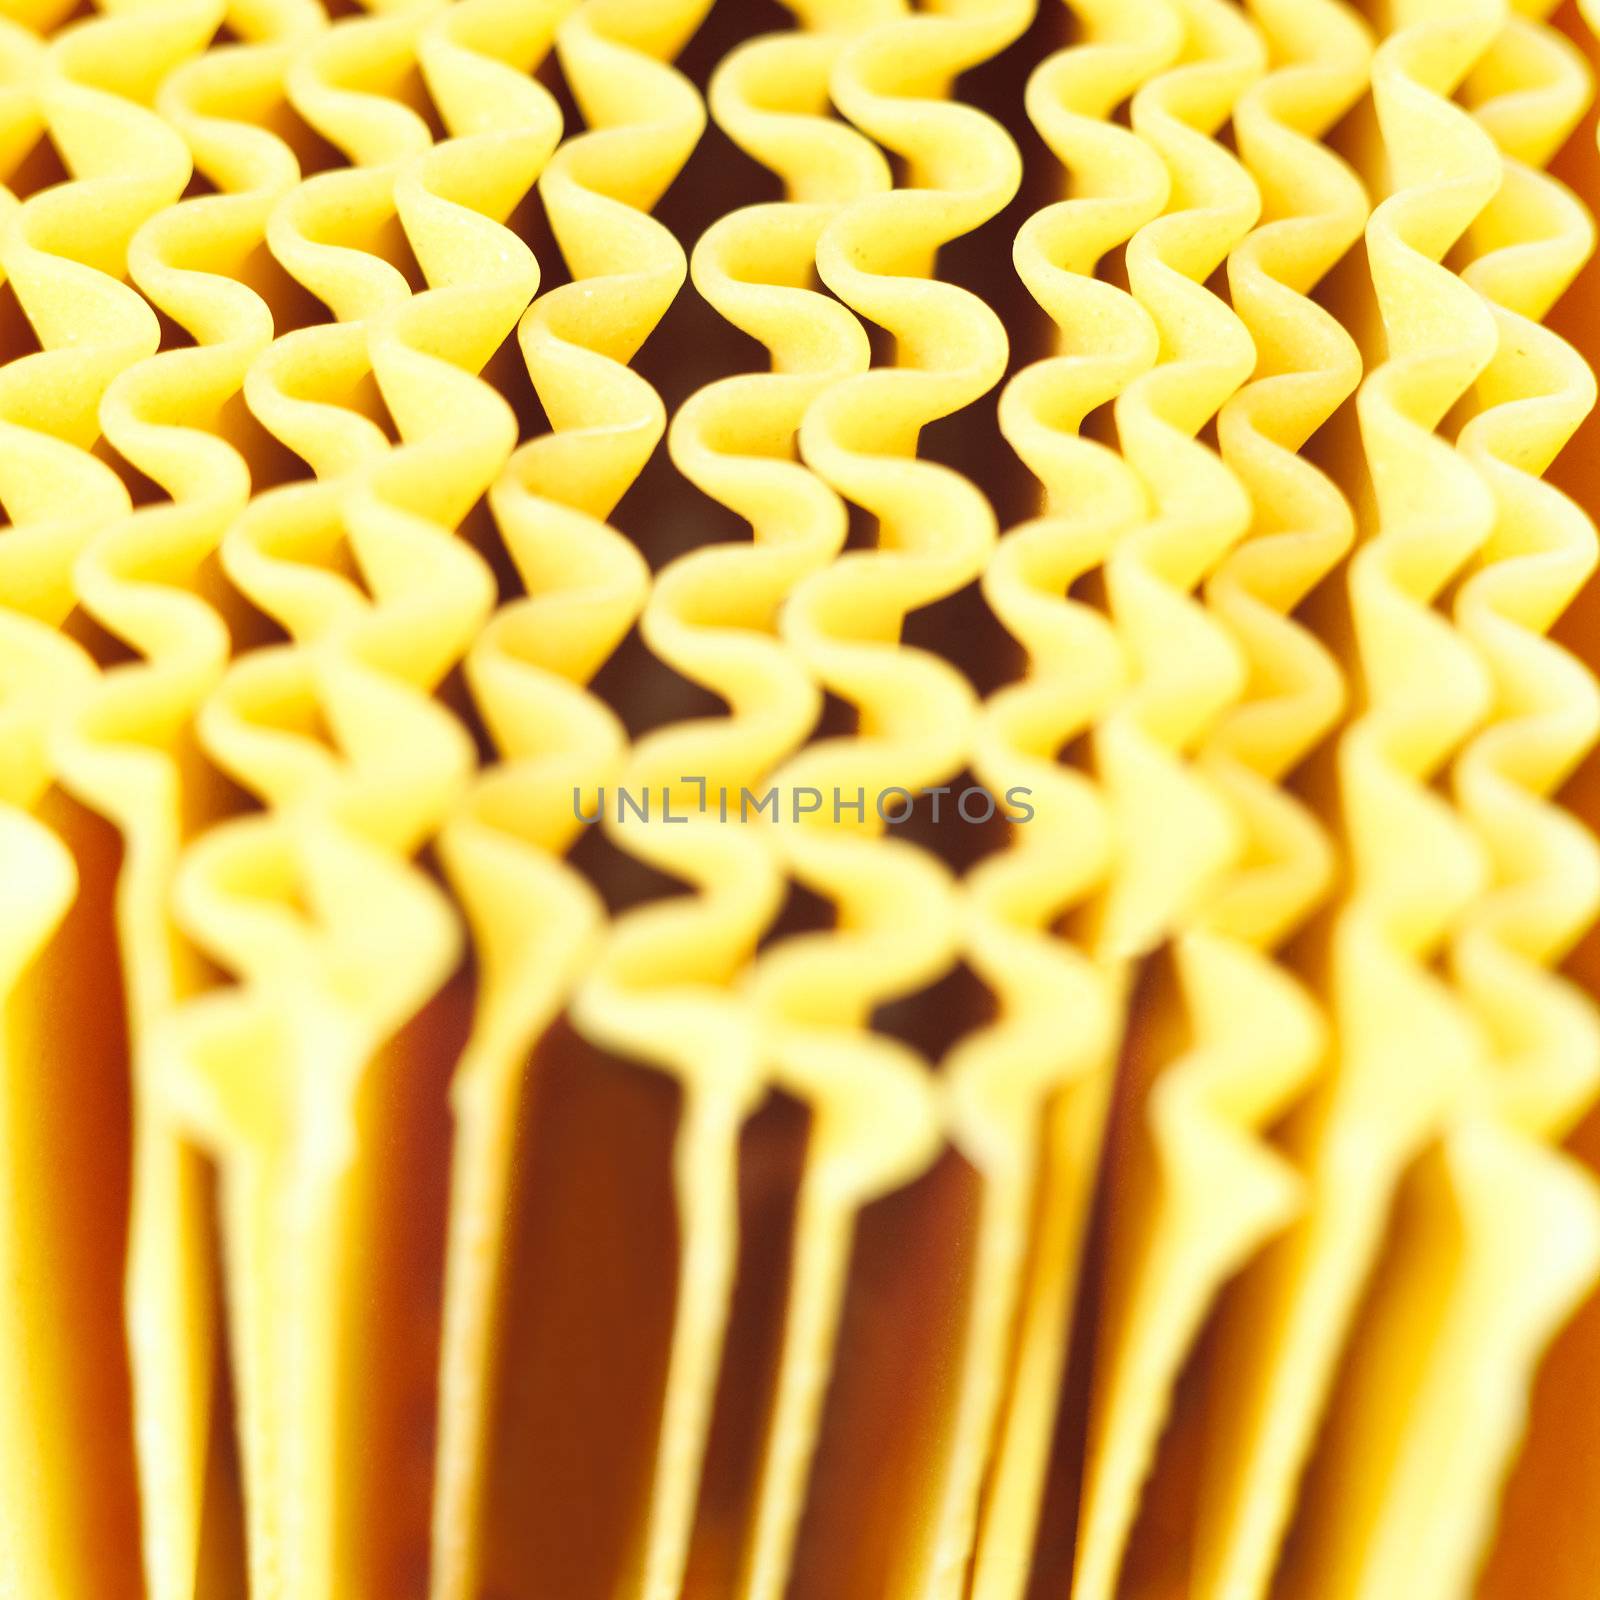 raw lasagne pasta sheets by zkruger